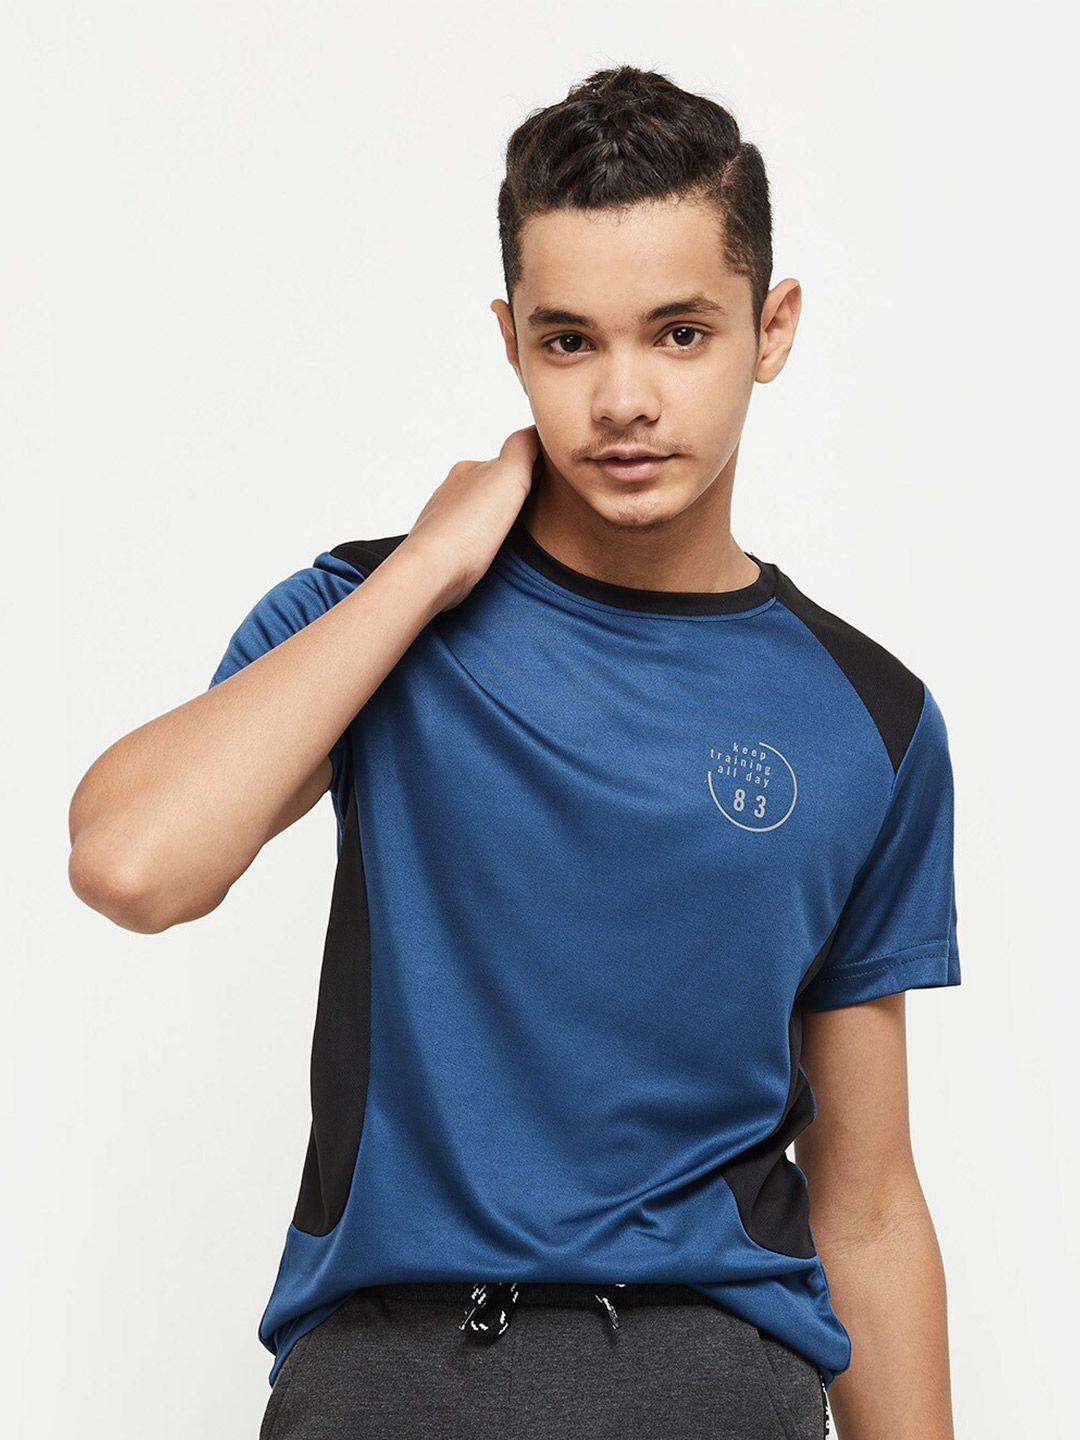 max-boys-blue-&-black-colourblocked-t-shirt